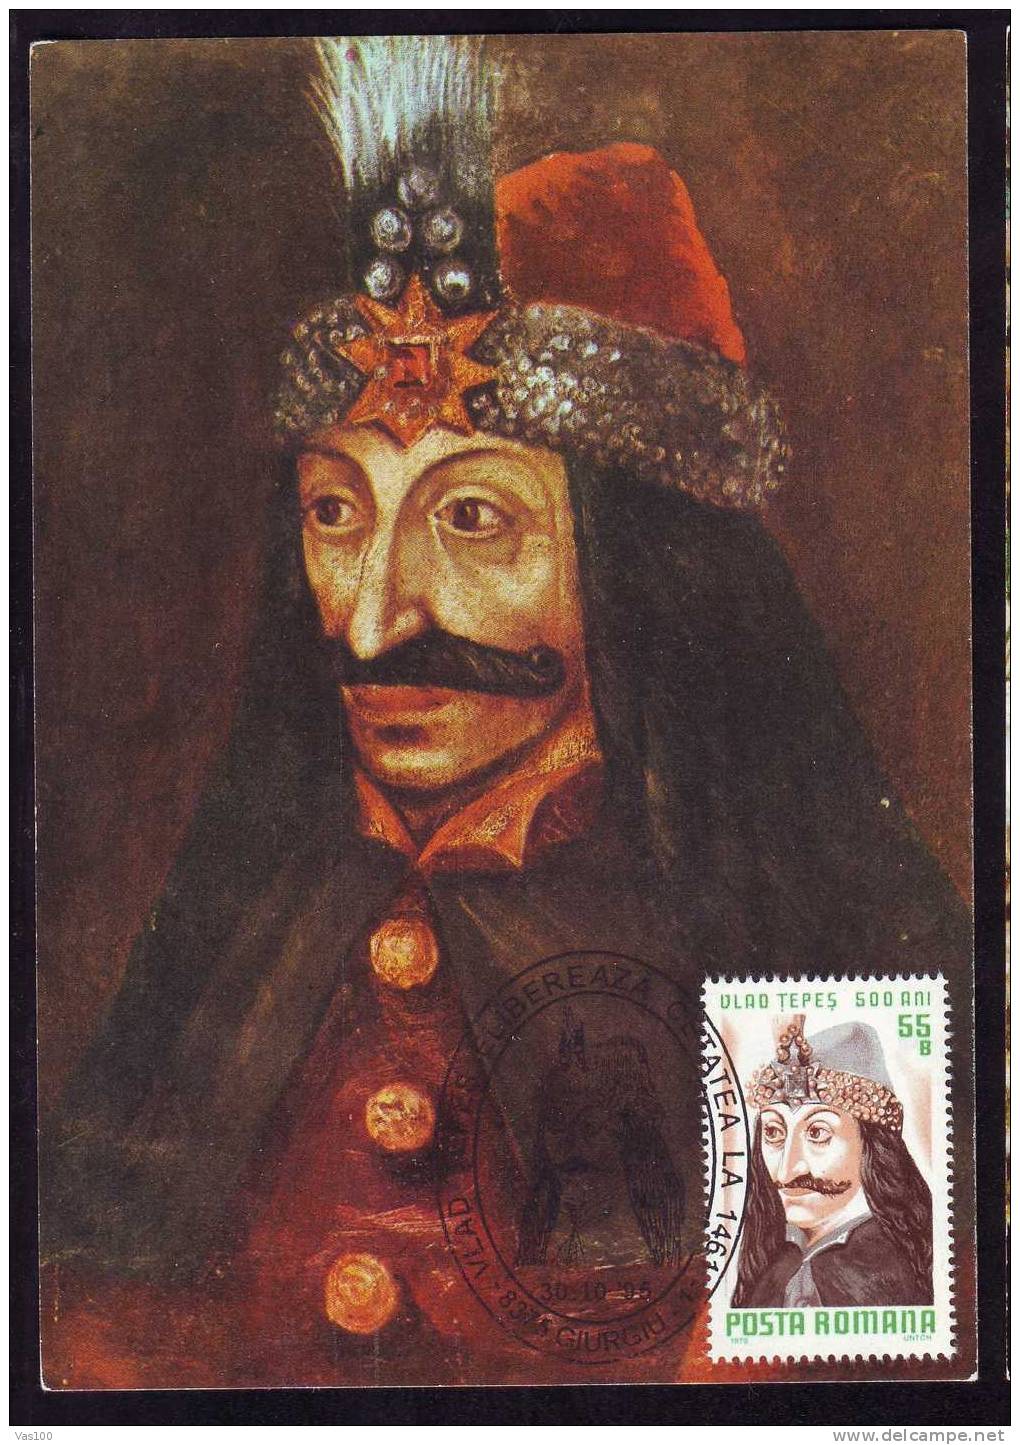 Dracula - Vlad Tepes - Vampire 1995 Maxi Card Carte Maximum Obliteration Giurgiu - Romania. - Fairy Tales, Popular Stories & Legends